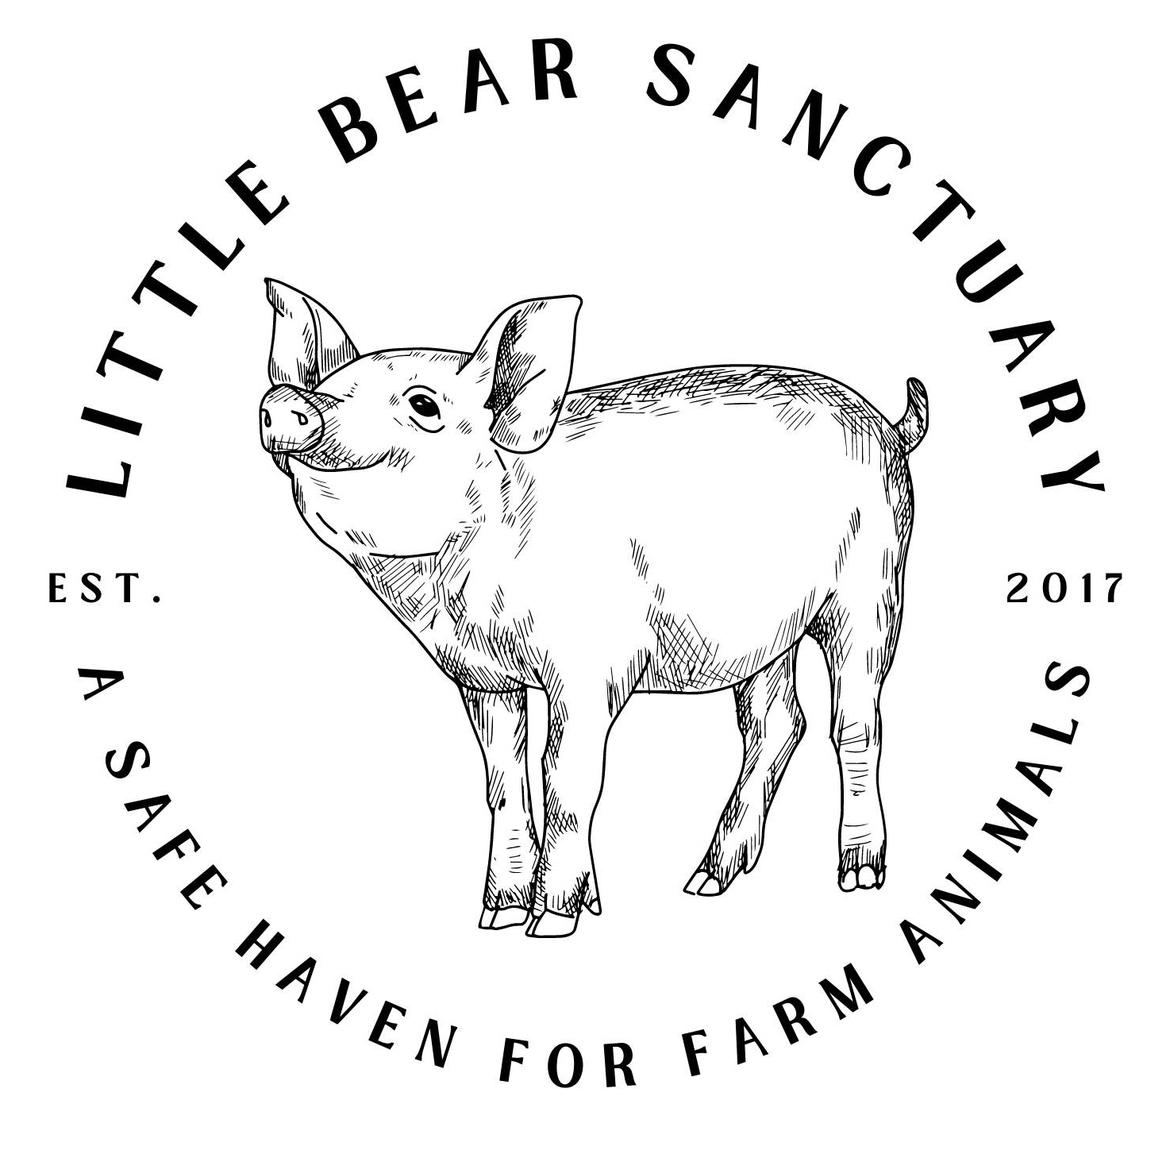 Little Bear's images